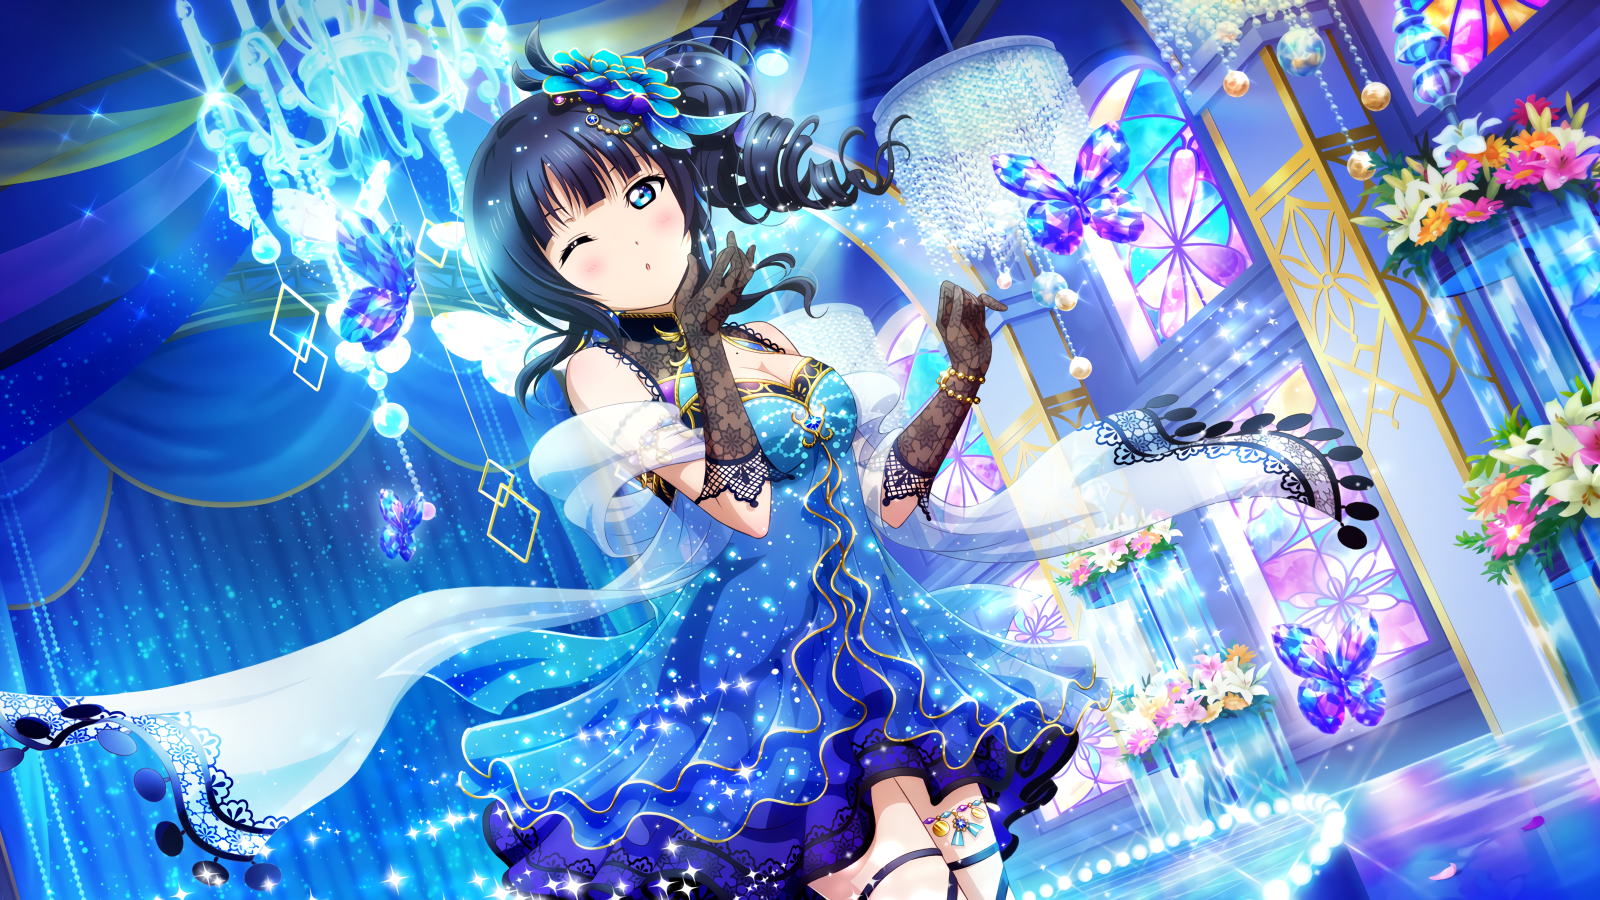 Anime girl in a beautiful blue dress